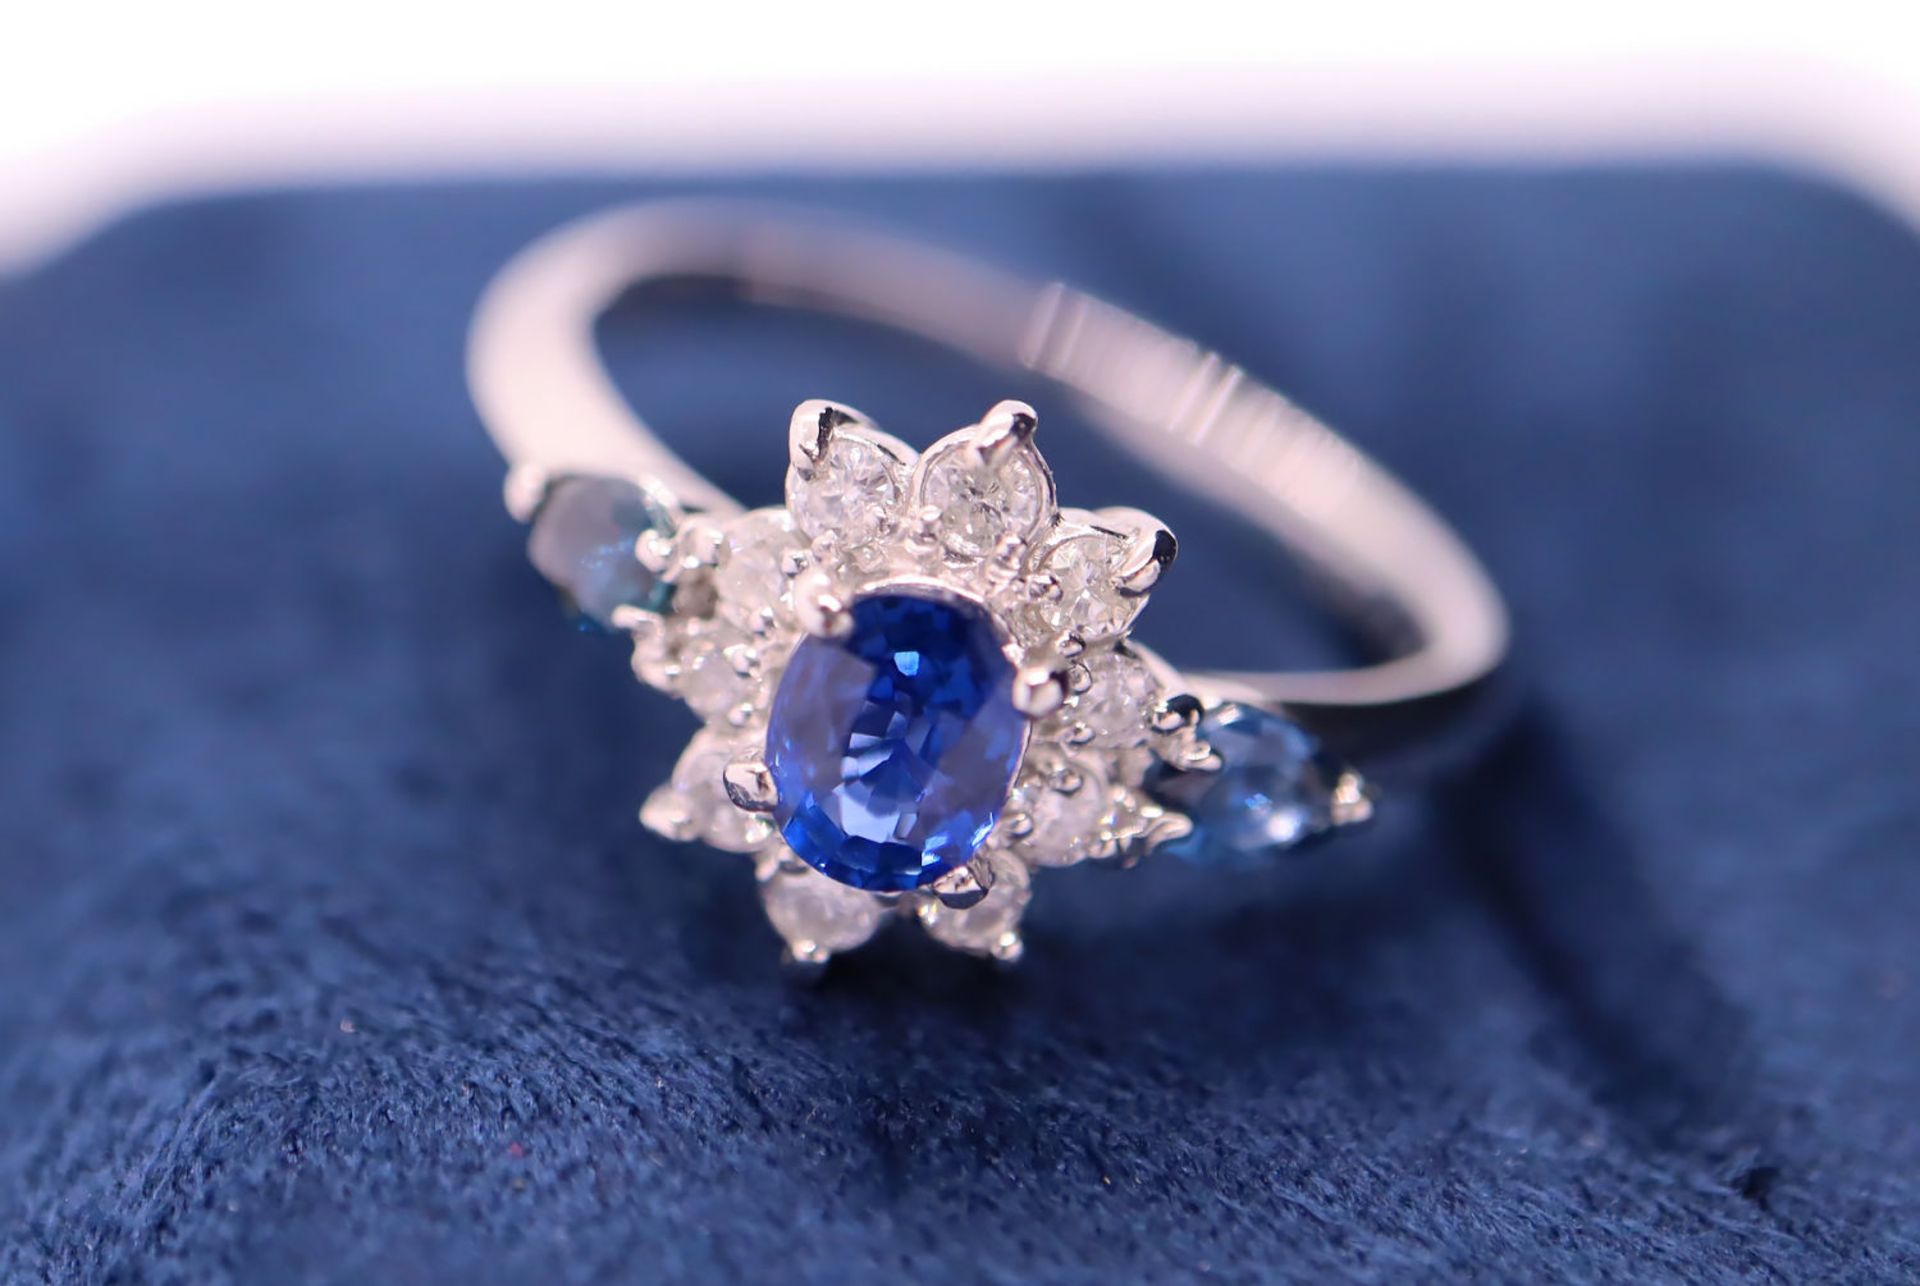 STUNNING 'VIVID BLUE' SAPPHIRE & DIAMOND RING set in PLATINUM '900 PT.' - Image 3 of 4